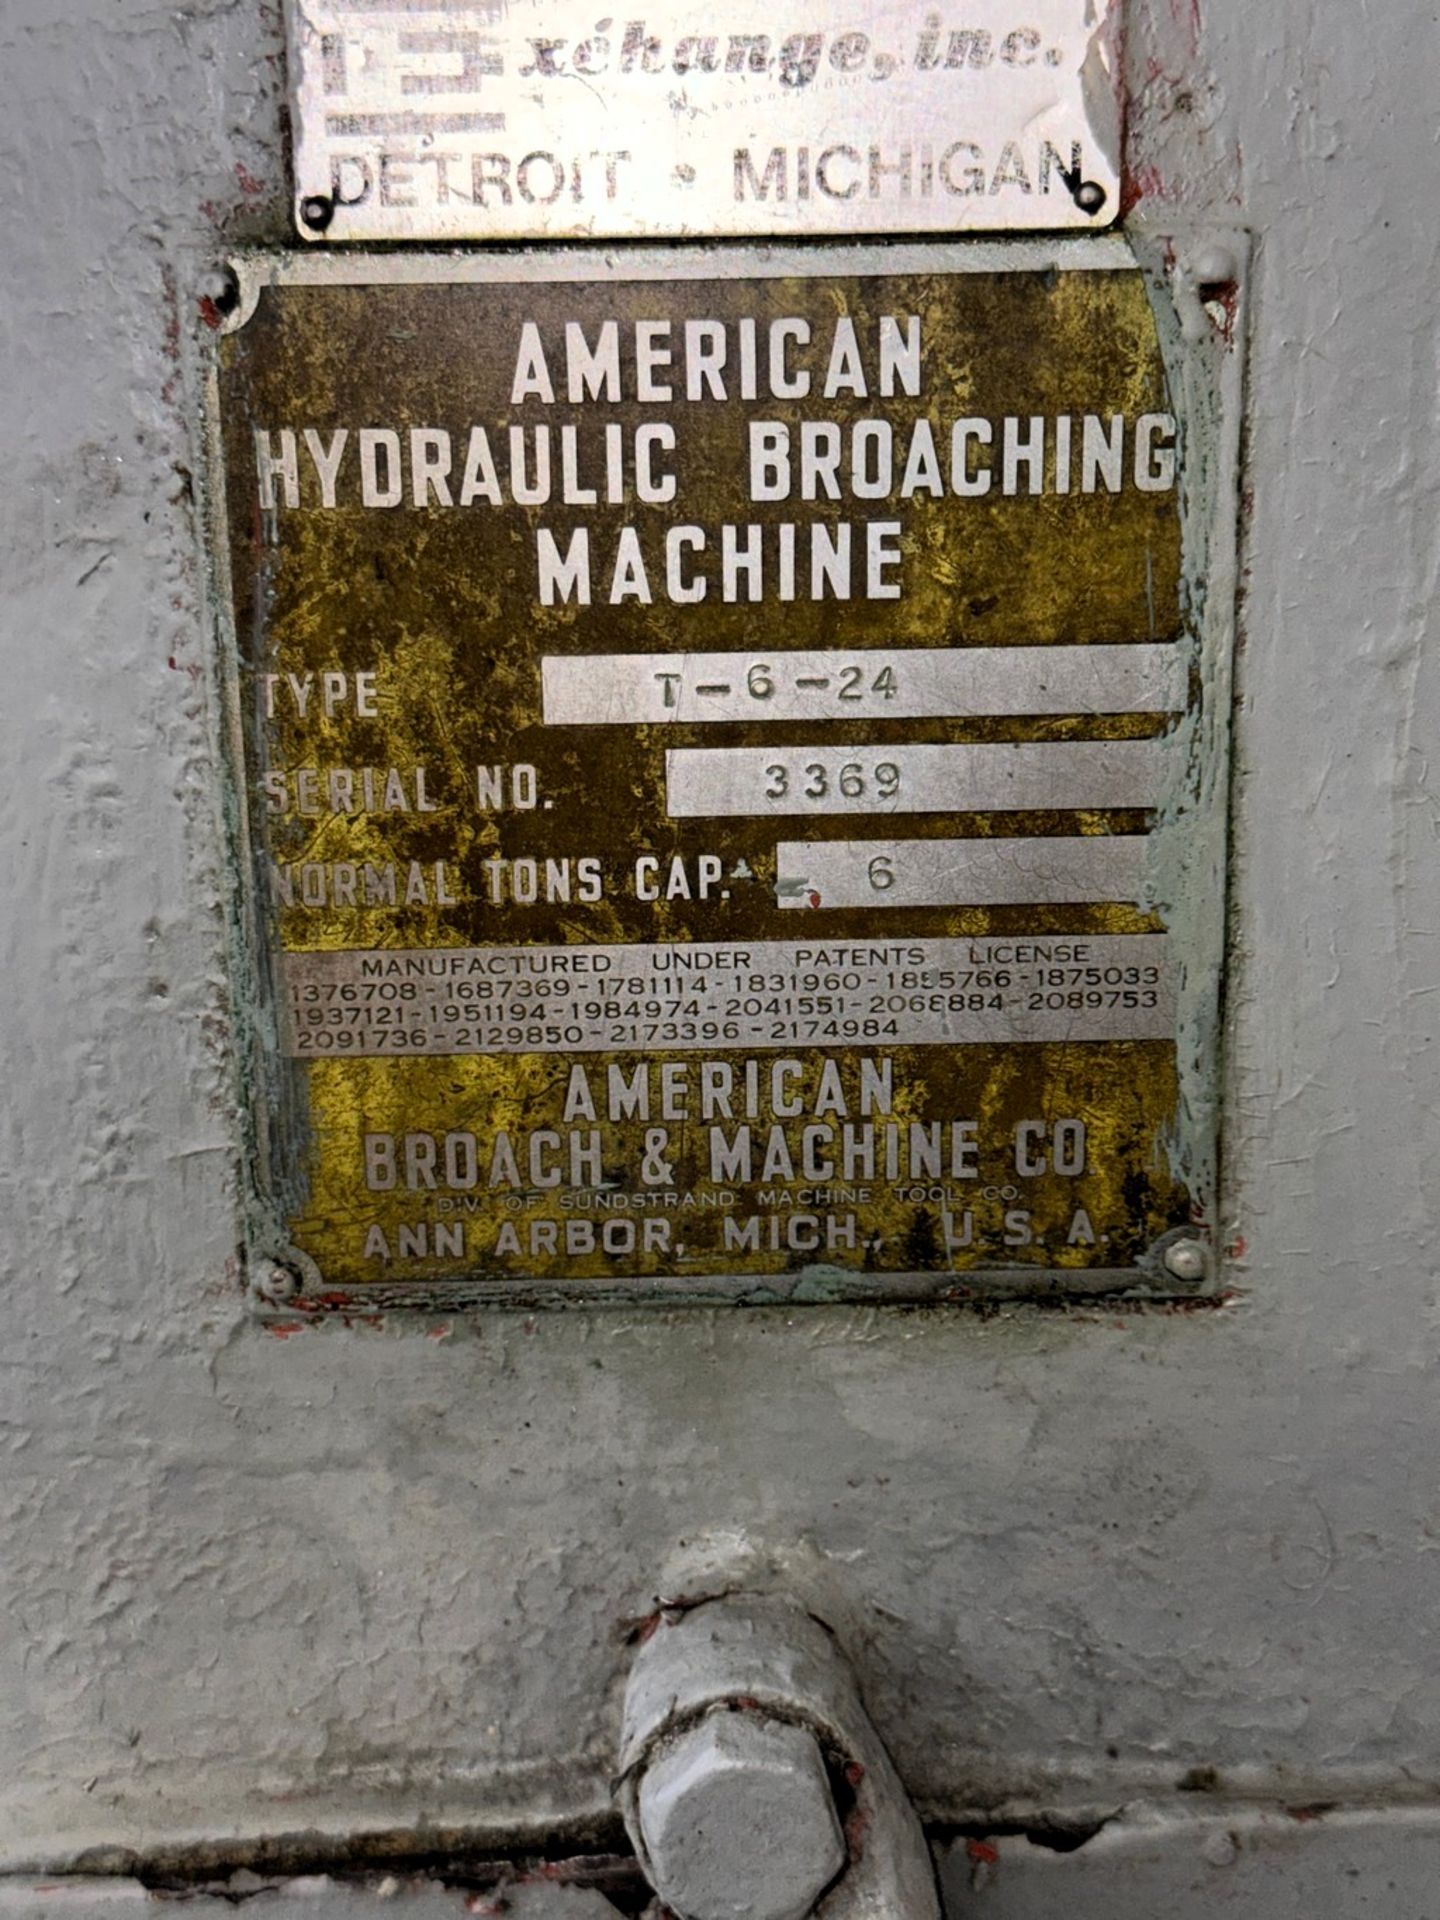 American Model T-6-24 Vertical Hydraulic Broach - Image 7 of 7